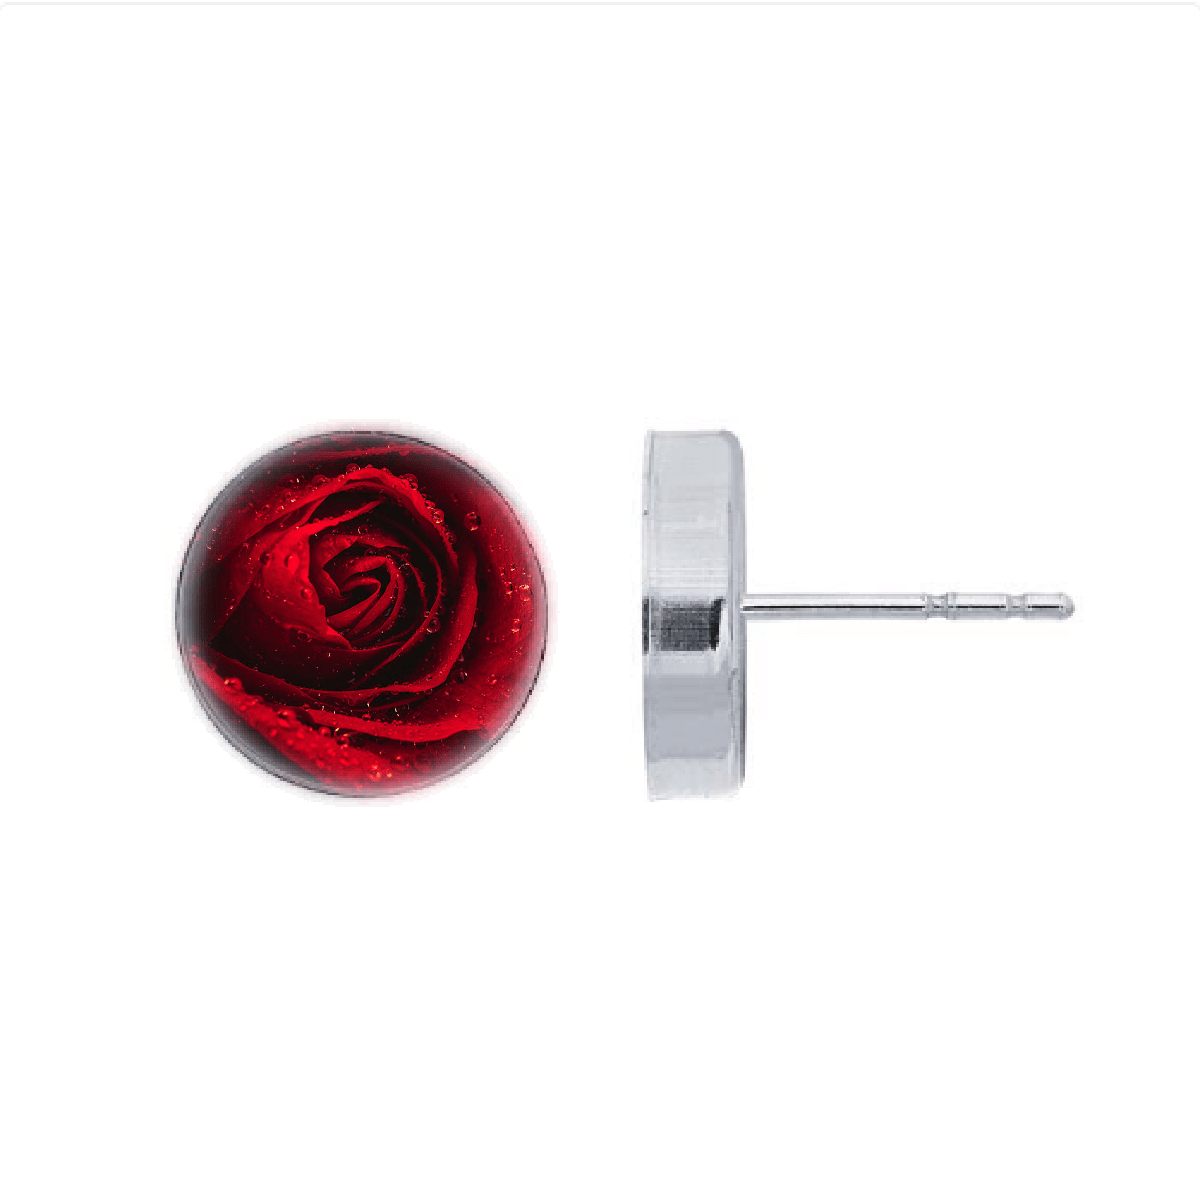 Red Rose Garden Inspired Earrings by Hanna Tornyai Earrings